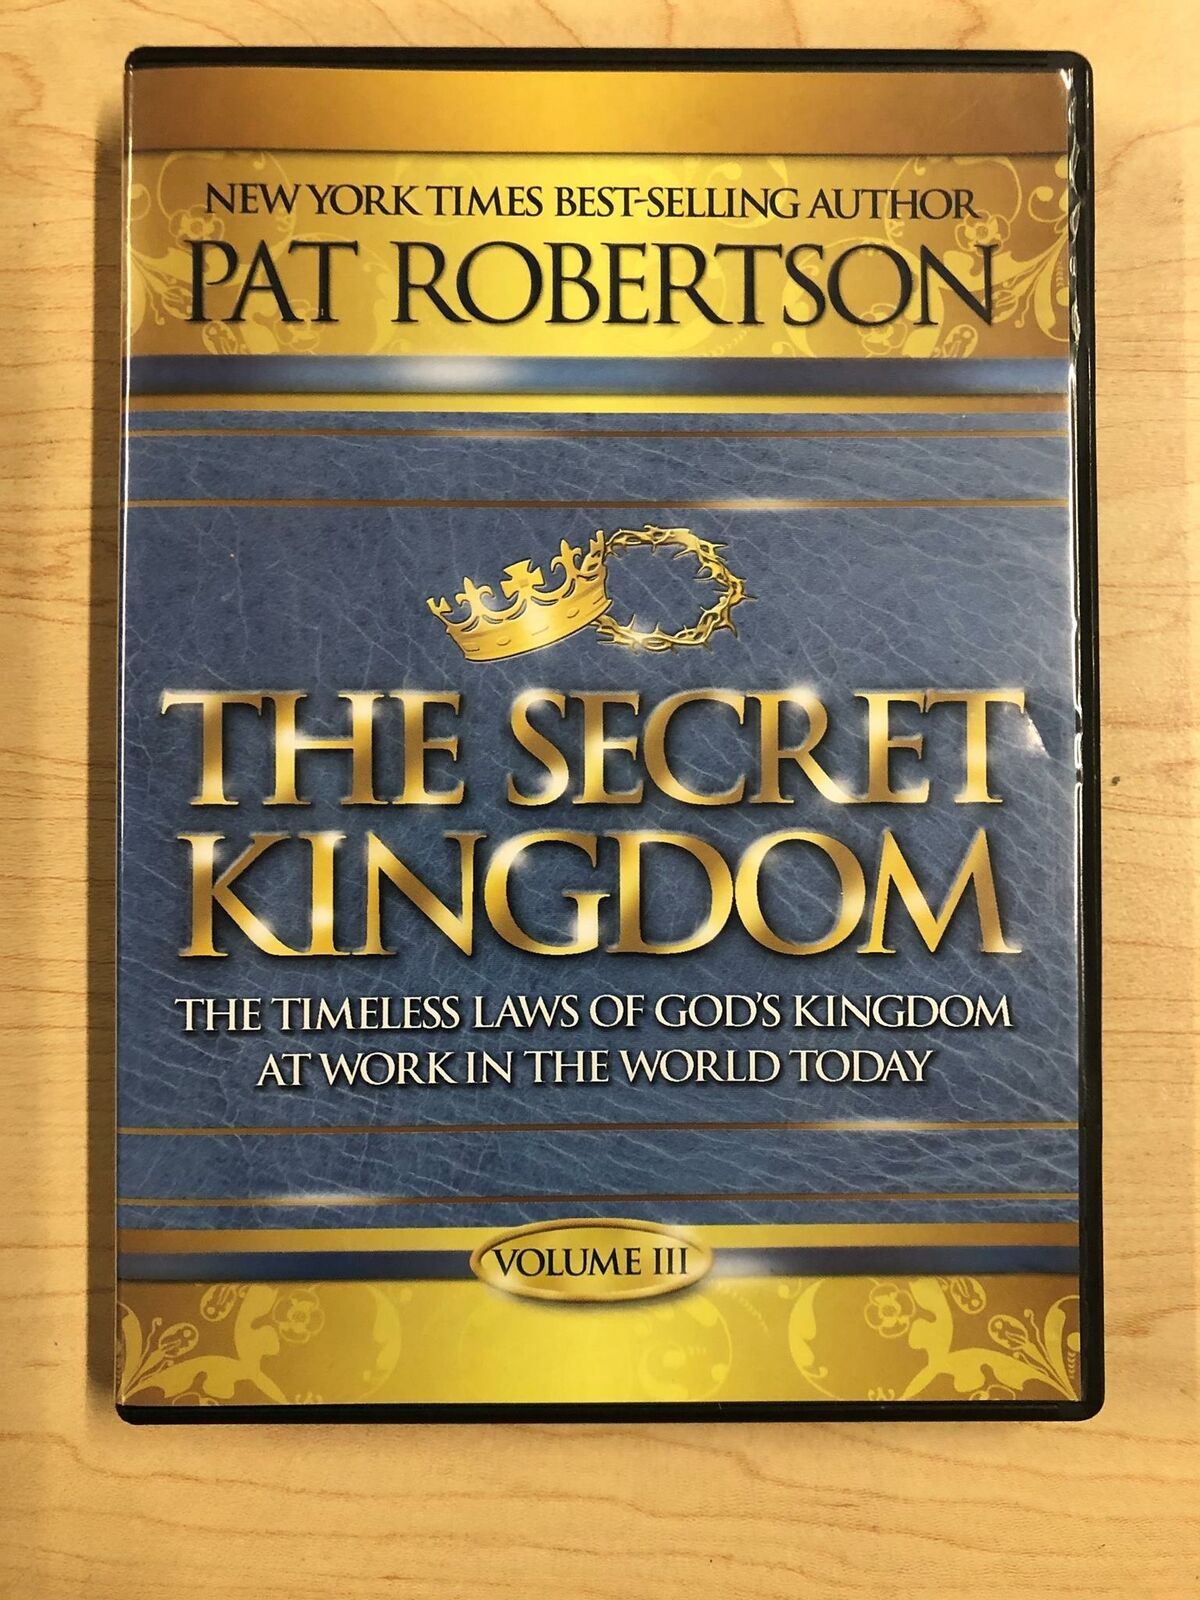 The Secret Kingdom Volume 3 (DVD, Pat Robertson, 2010) - G1004